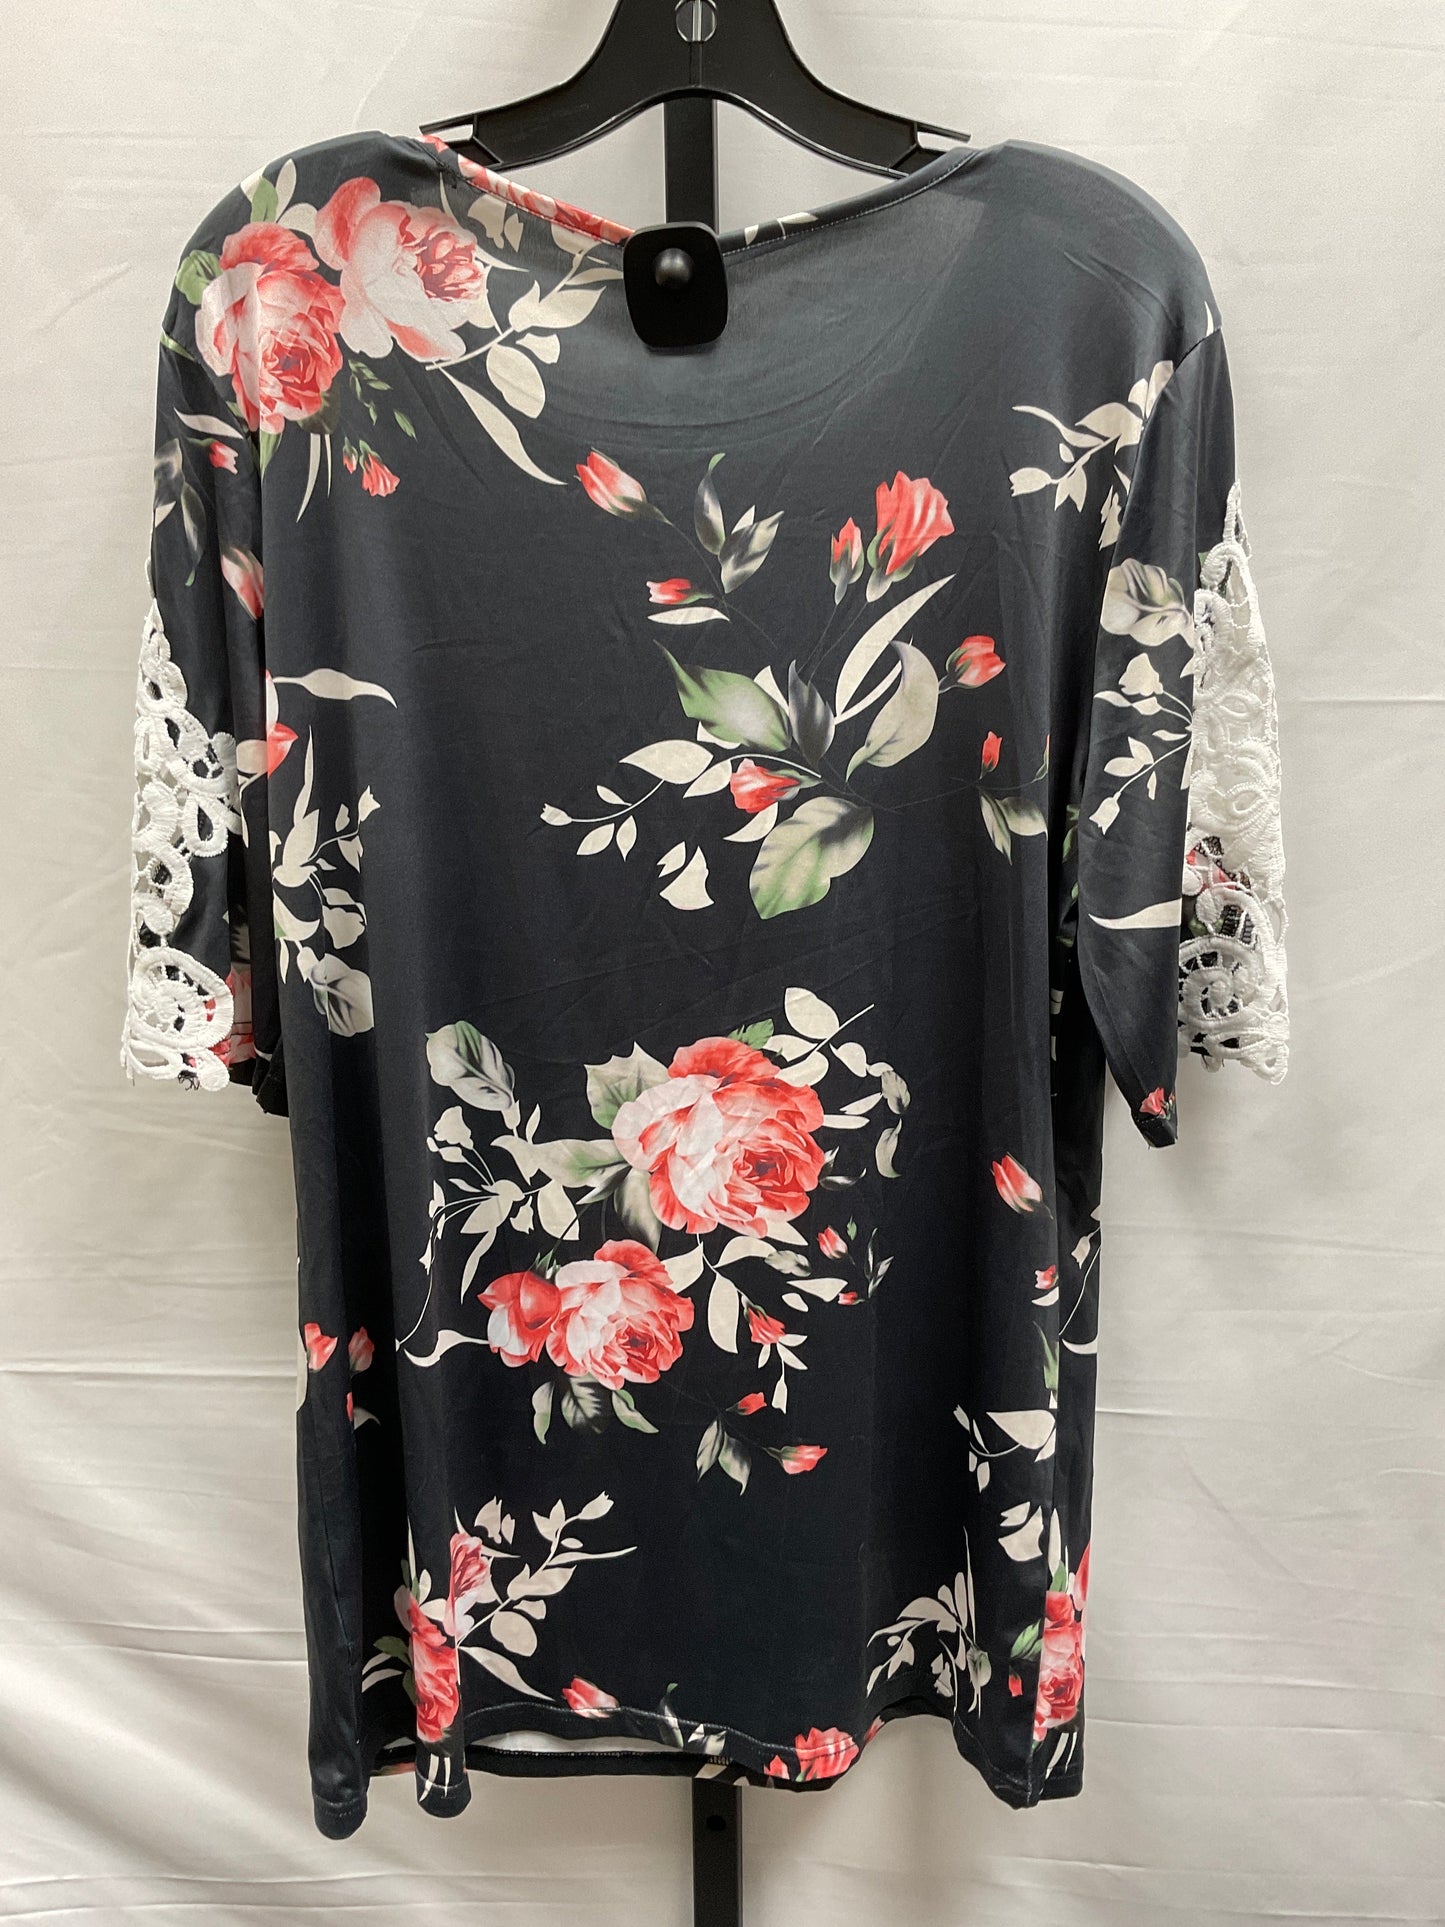 Floral Print Top Short Sleeve Clothes Mentor, Size Xl